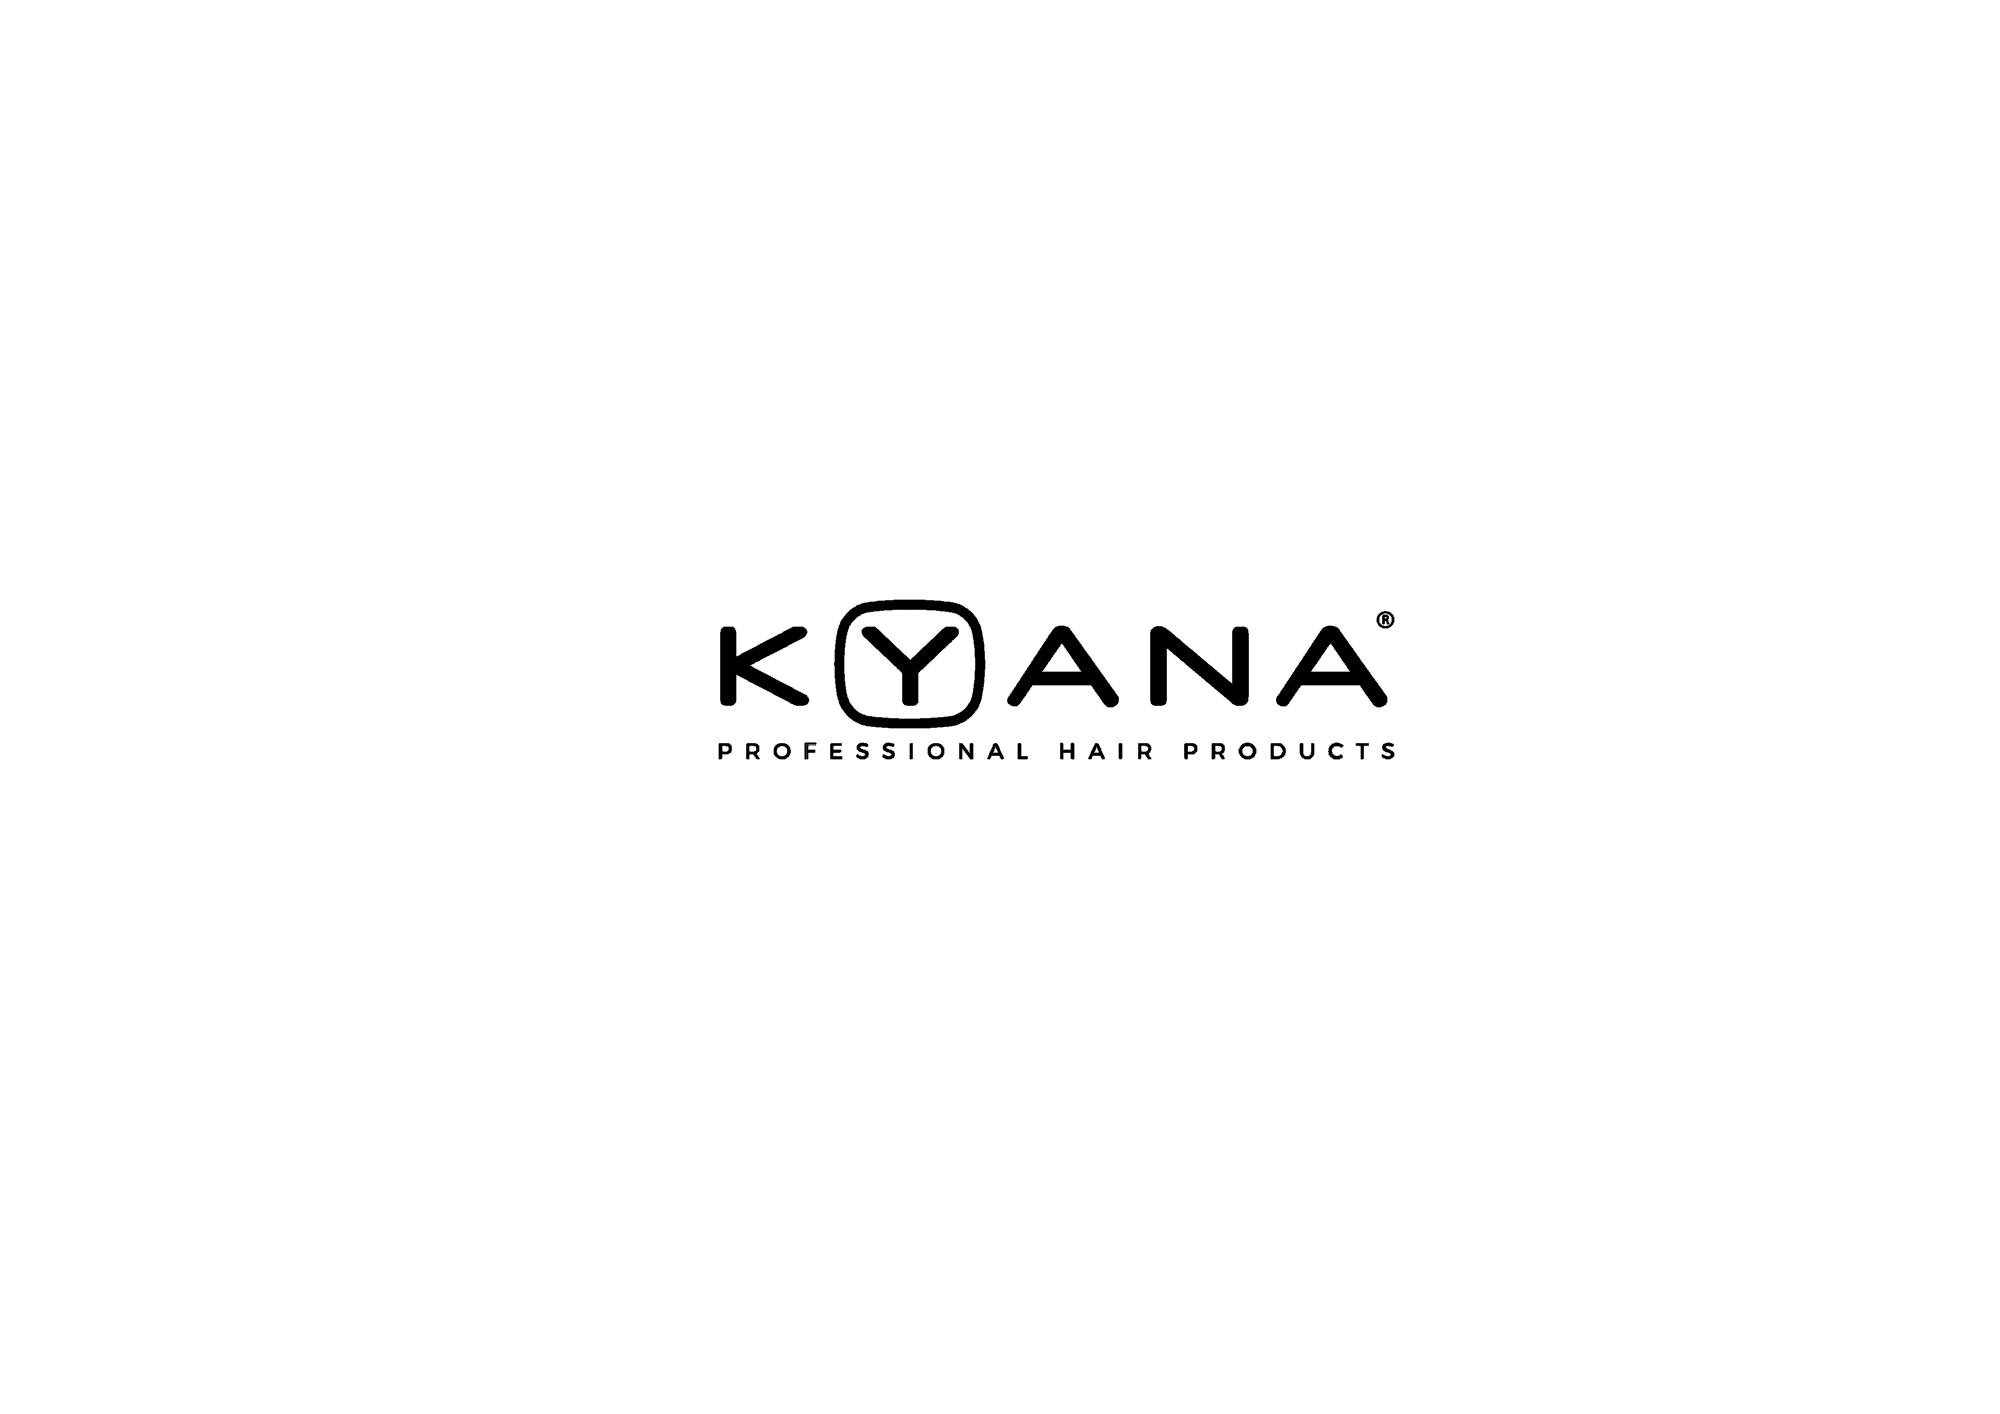 KYANA PROFESSIONAL HAIR PRODUCTS - Logo